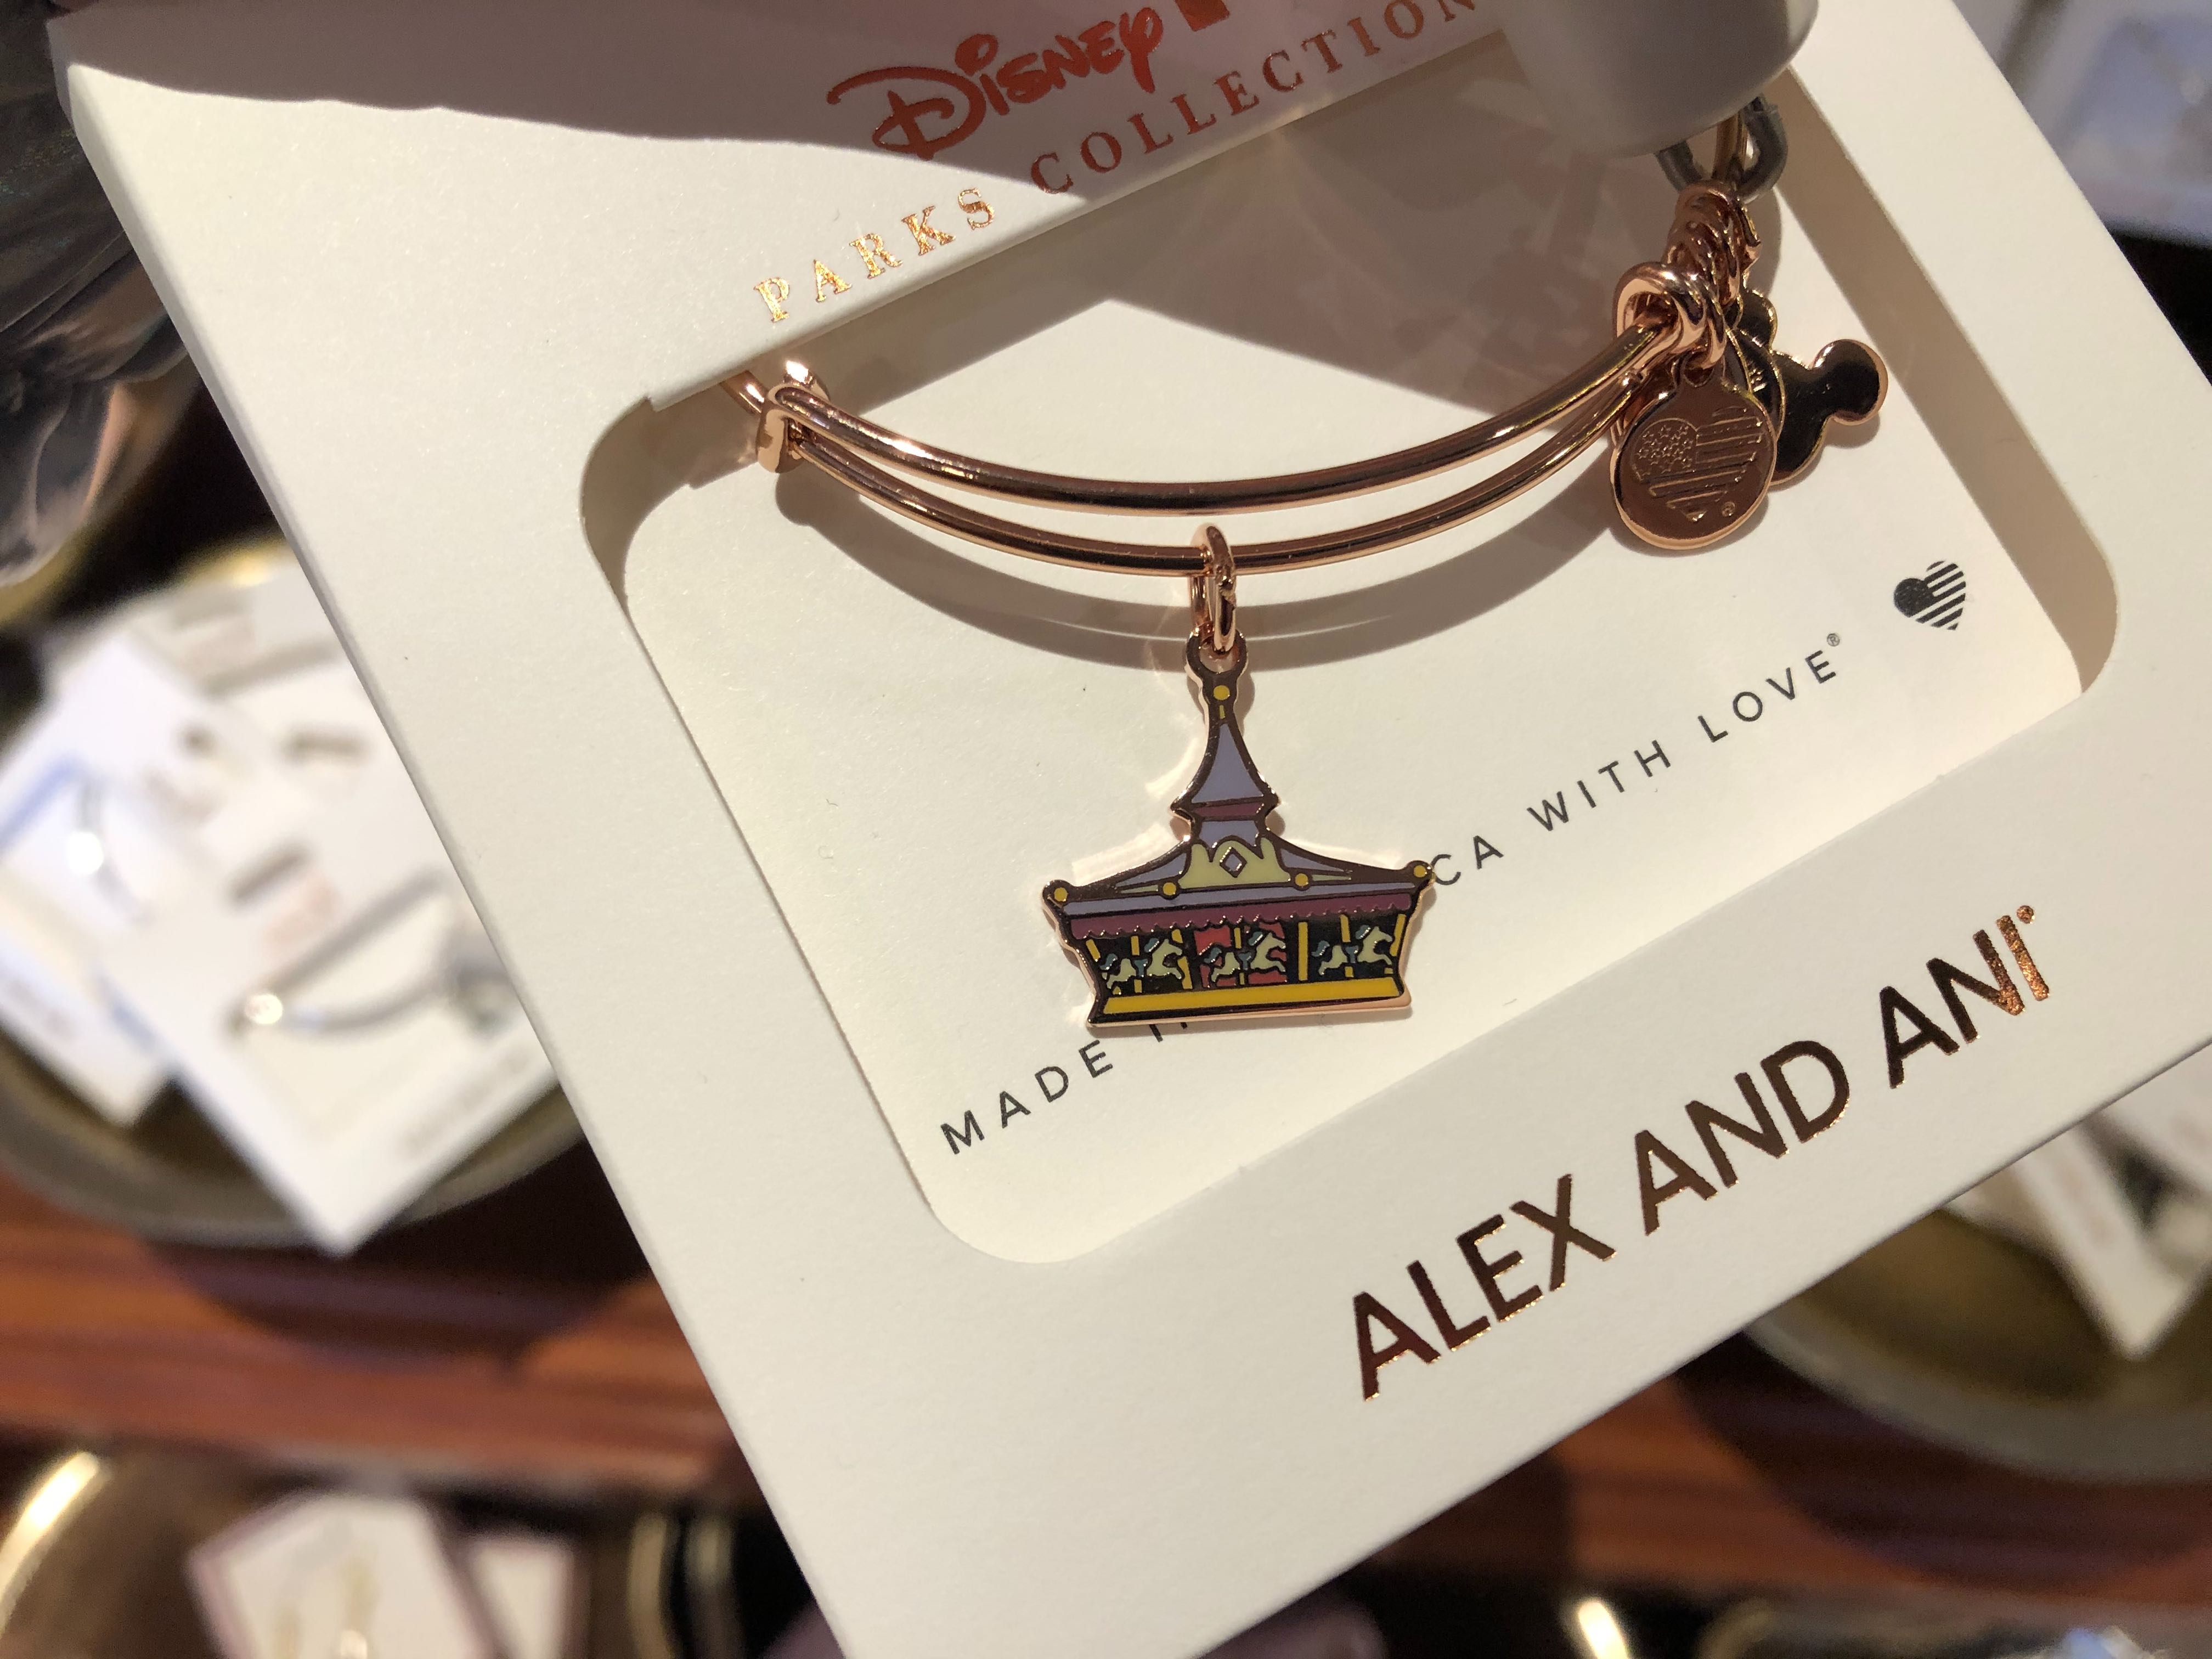 PHOTOS New Alex and Ani "Park Life" Collection Charm Bracelets Arrive